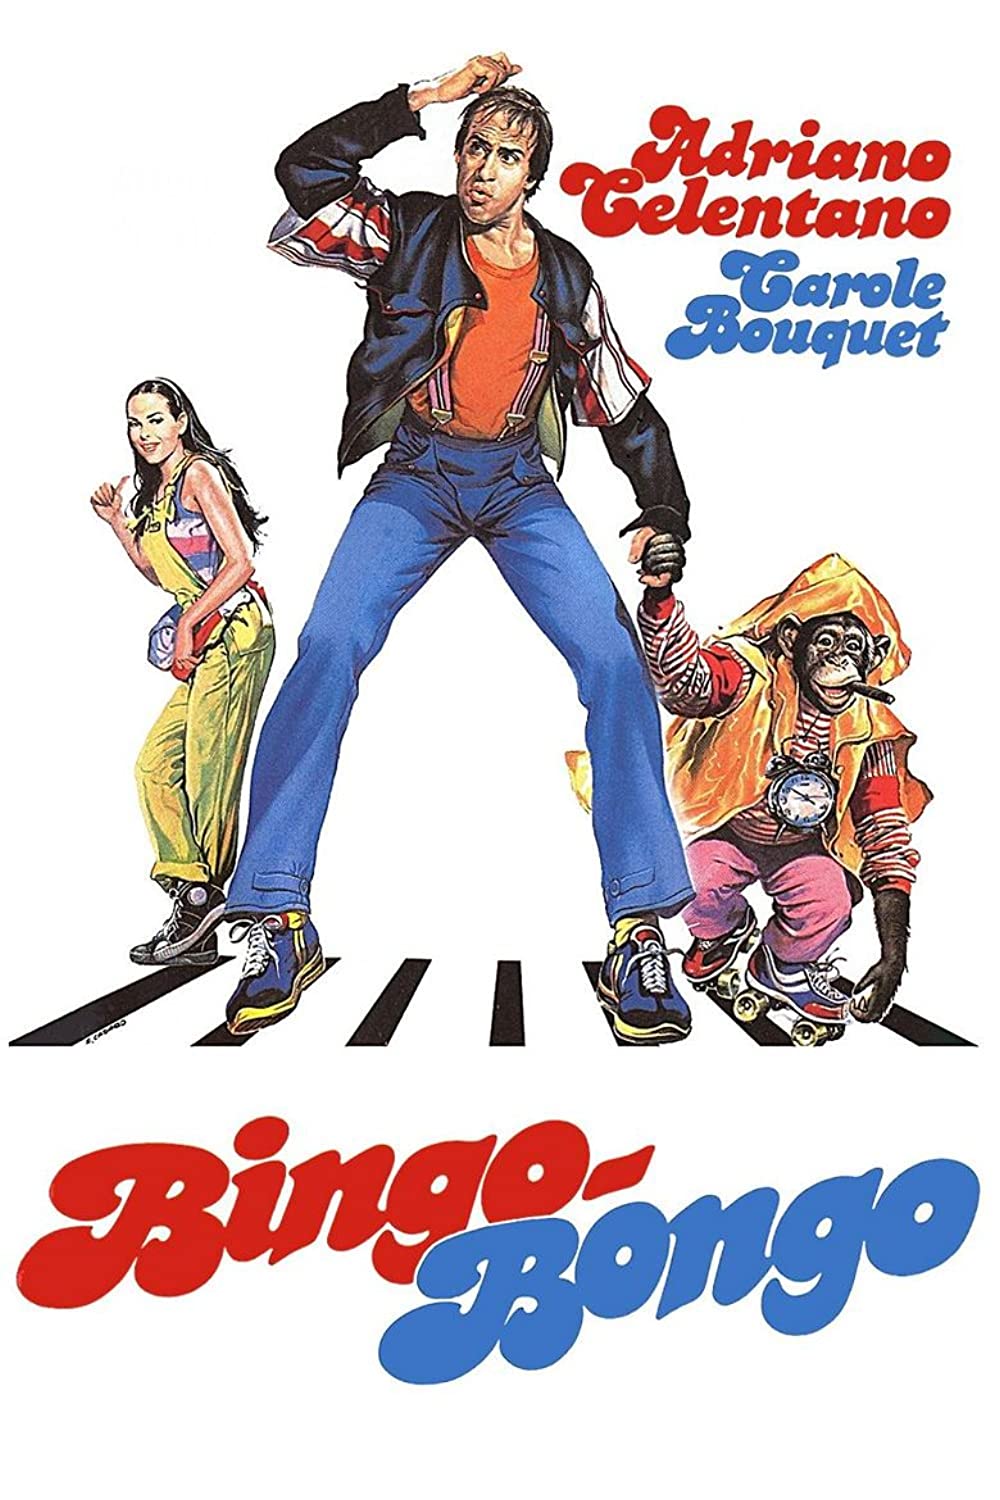 Stiahni si Filmy CZ/SK dabing Bingo Bongo (1982) BDRip.SK.IT.1080p  = CSFD 71%